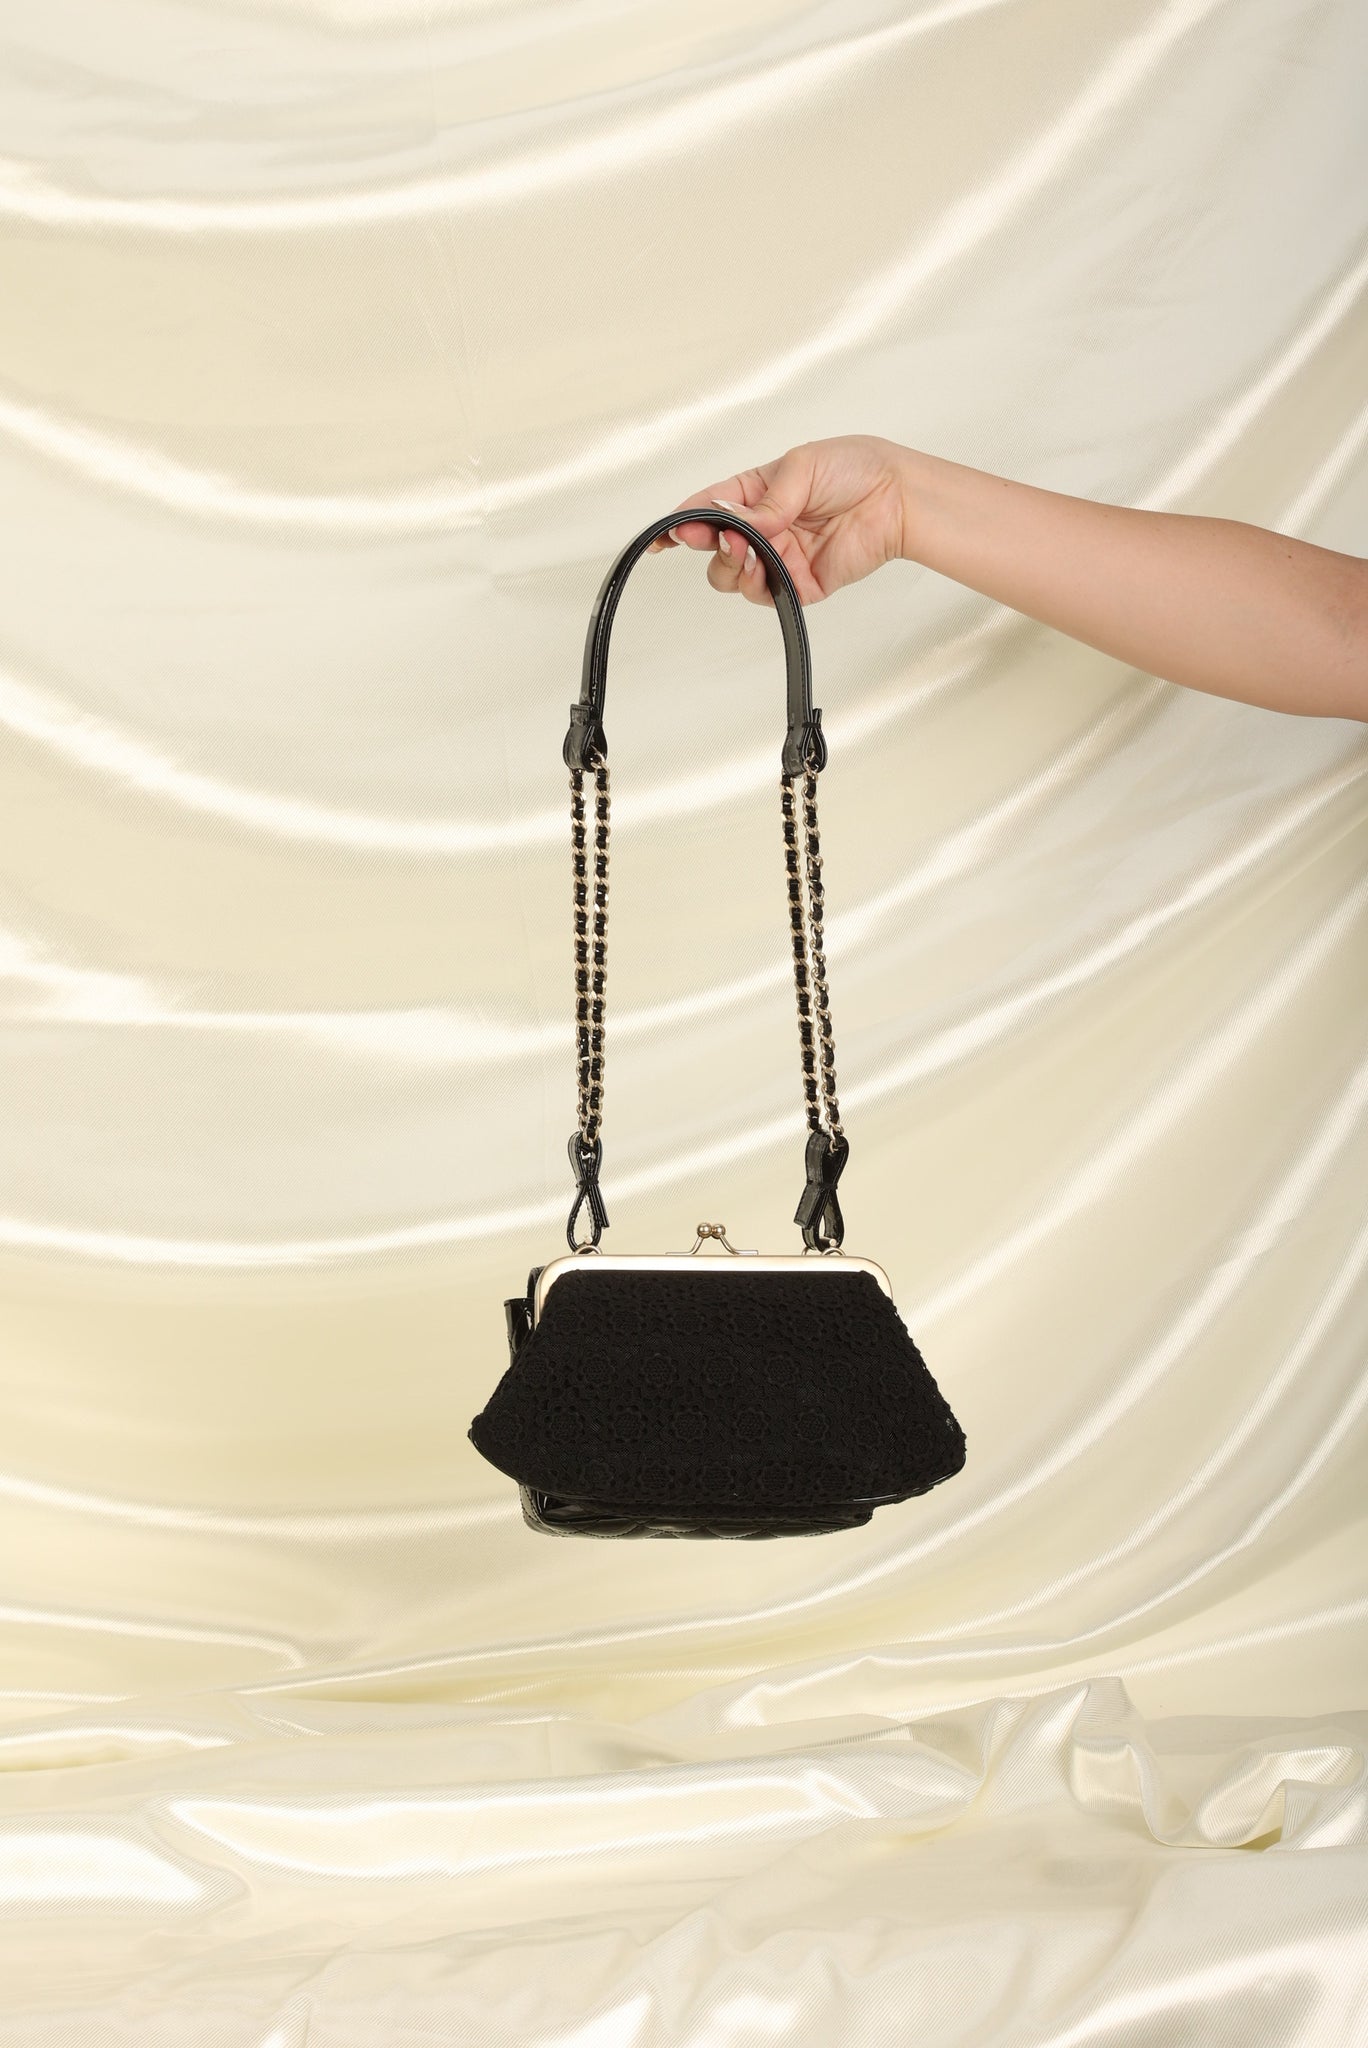 Chanel Box Minaudiere Shoulder Bag Limited Edition